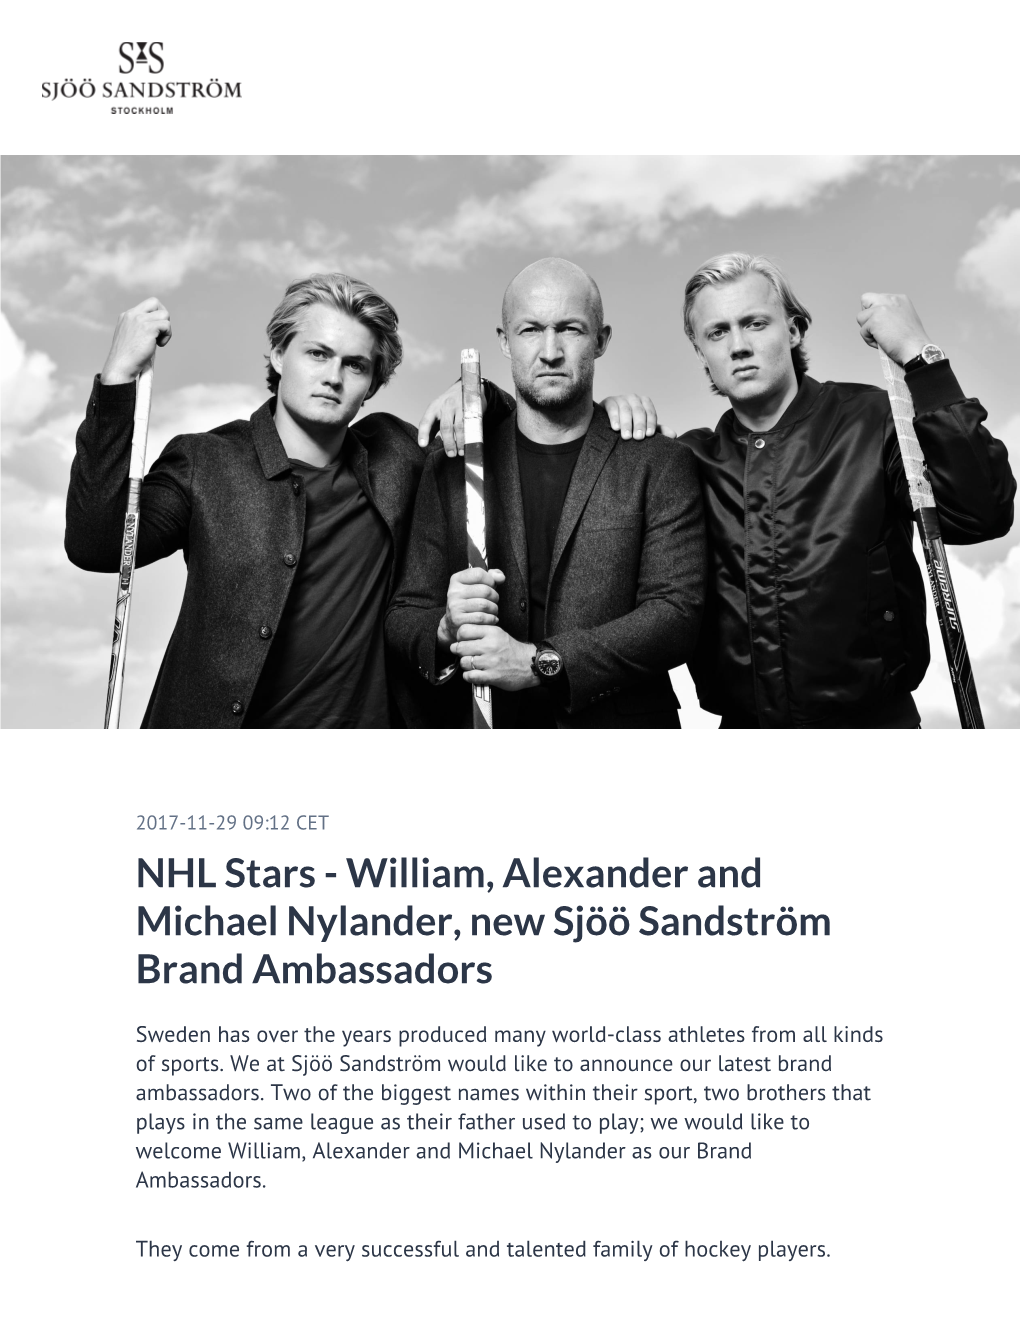 NHL Stars - William, Alexander and Michael Nylander, New Sjöö Sandström Brand Ambassadors